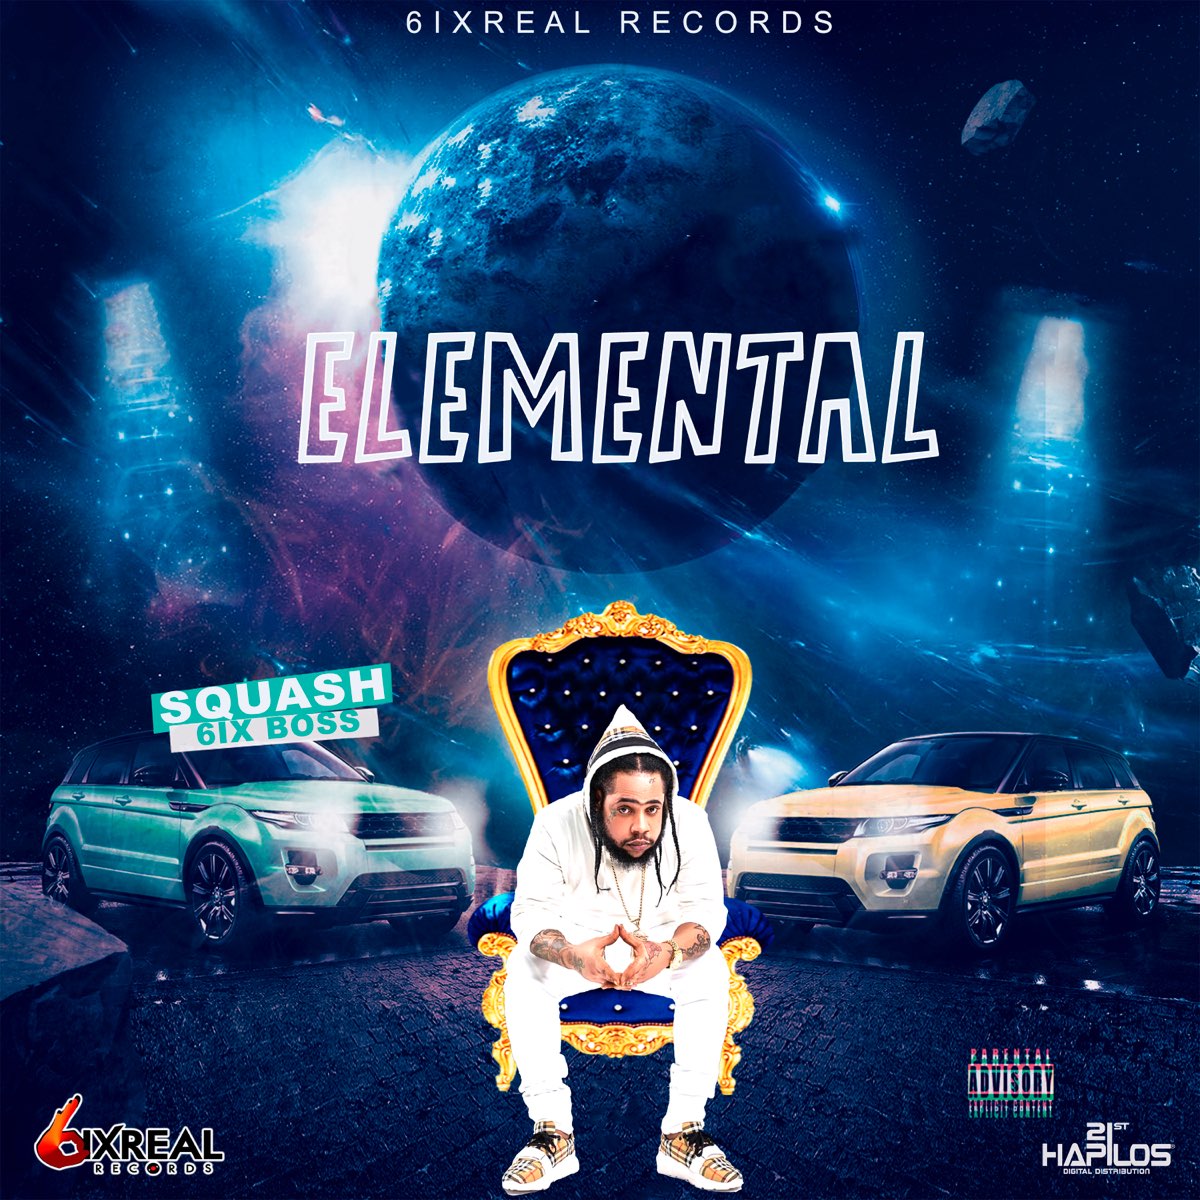 Elemental - Single by SQUASH on Apple Music